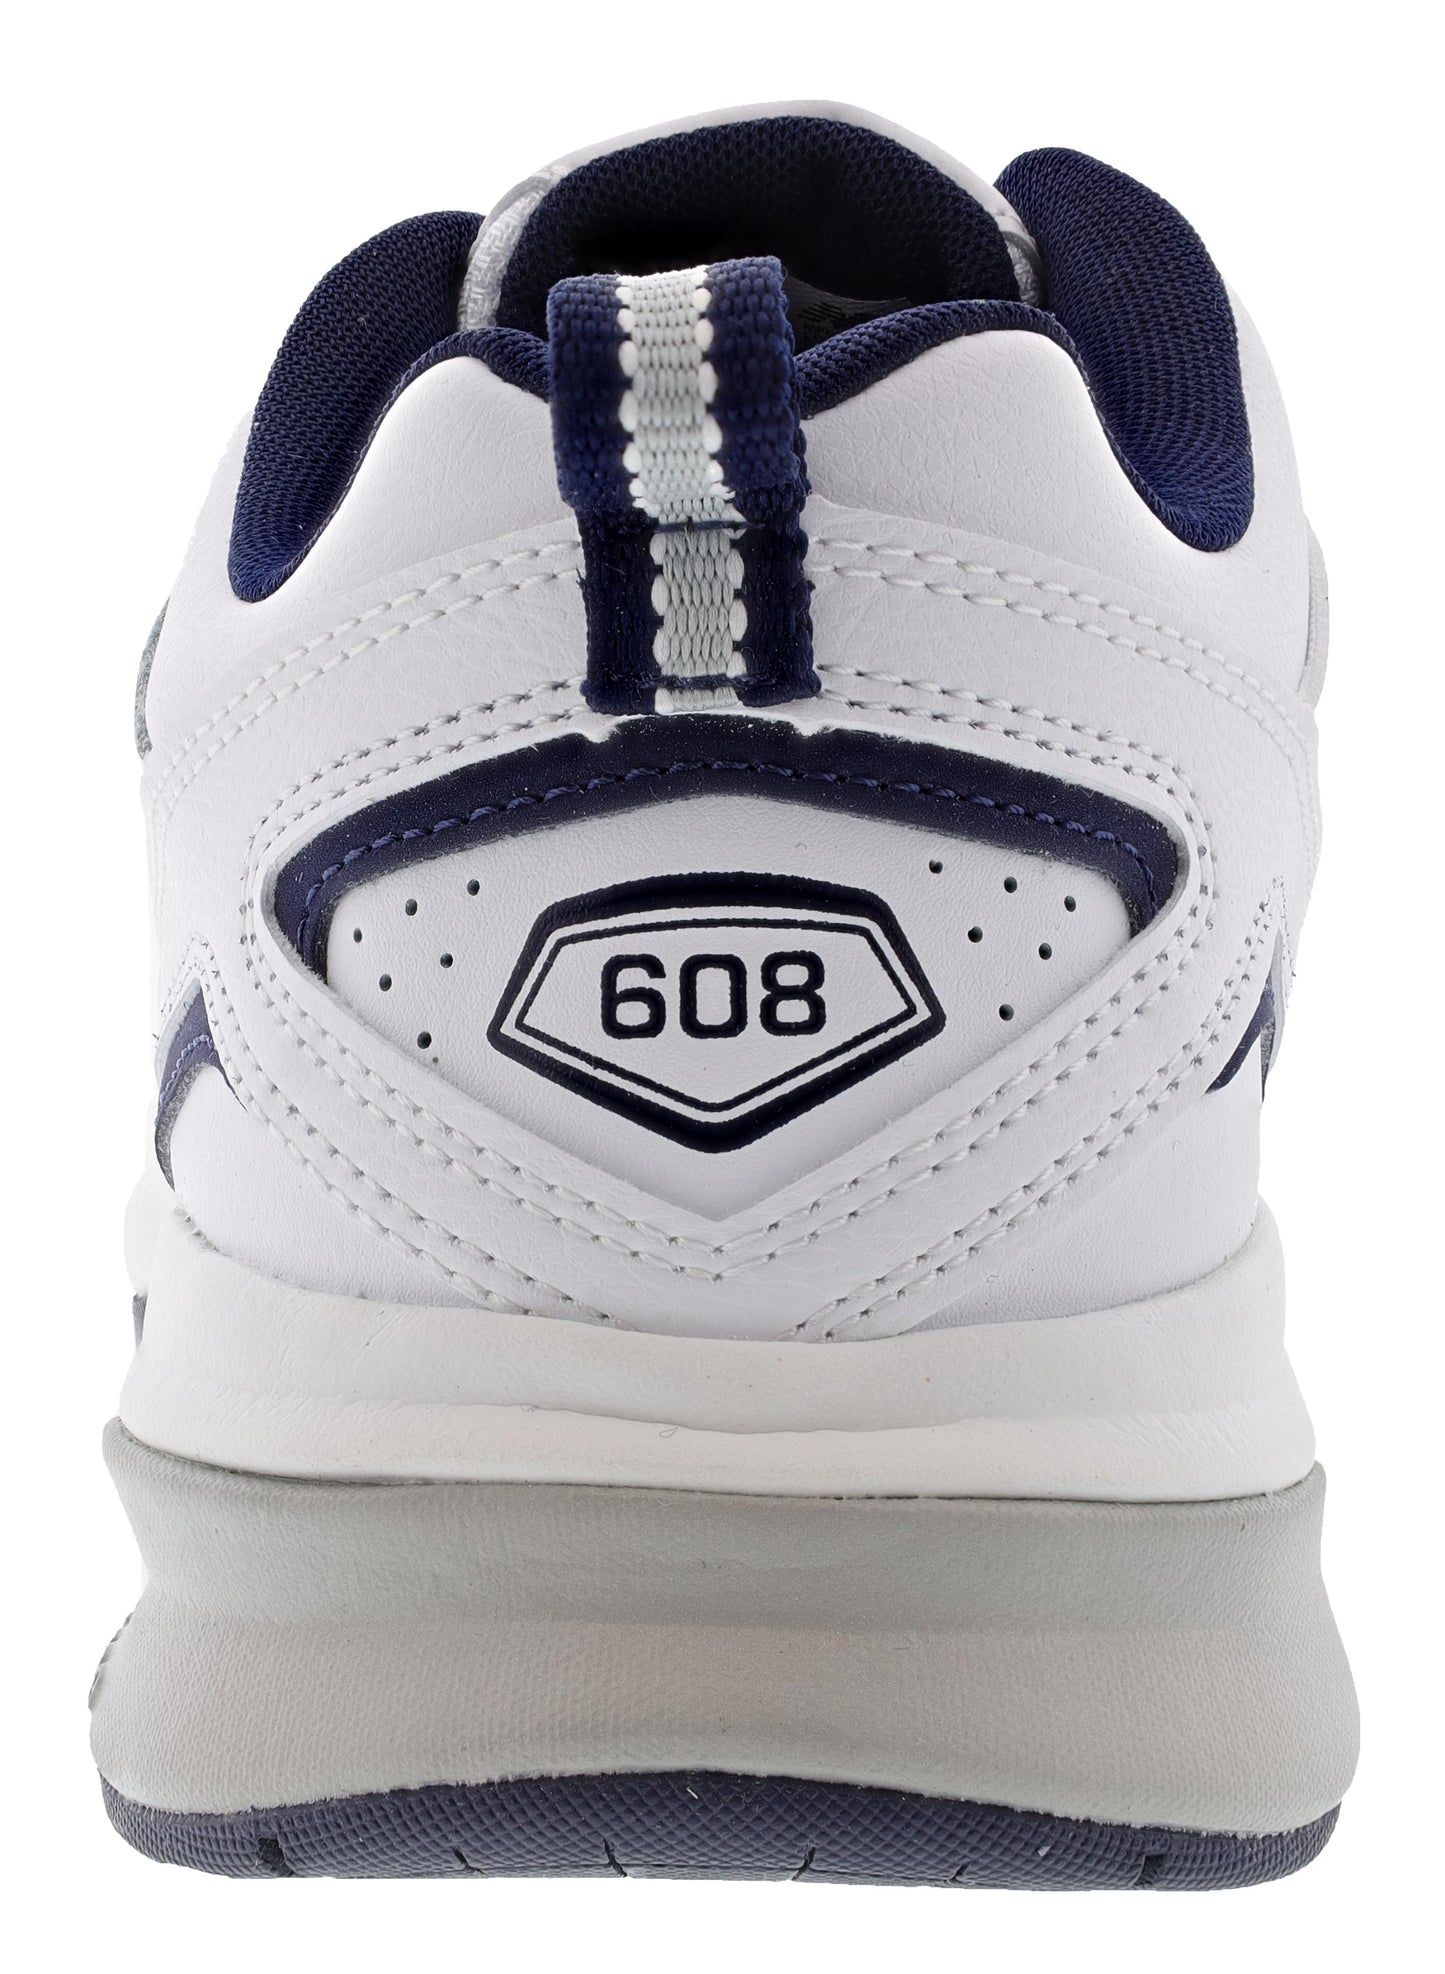 
                  
                    New Balance Men's 608 v7 Comfort Training Shoes
                  
                